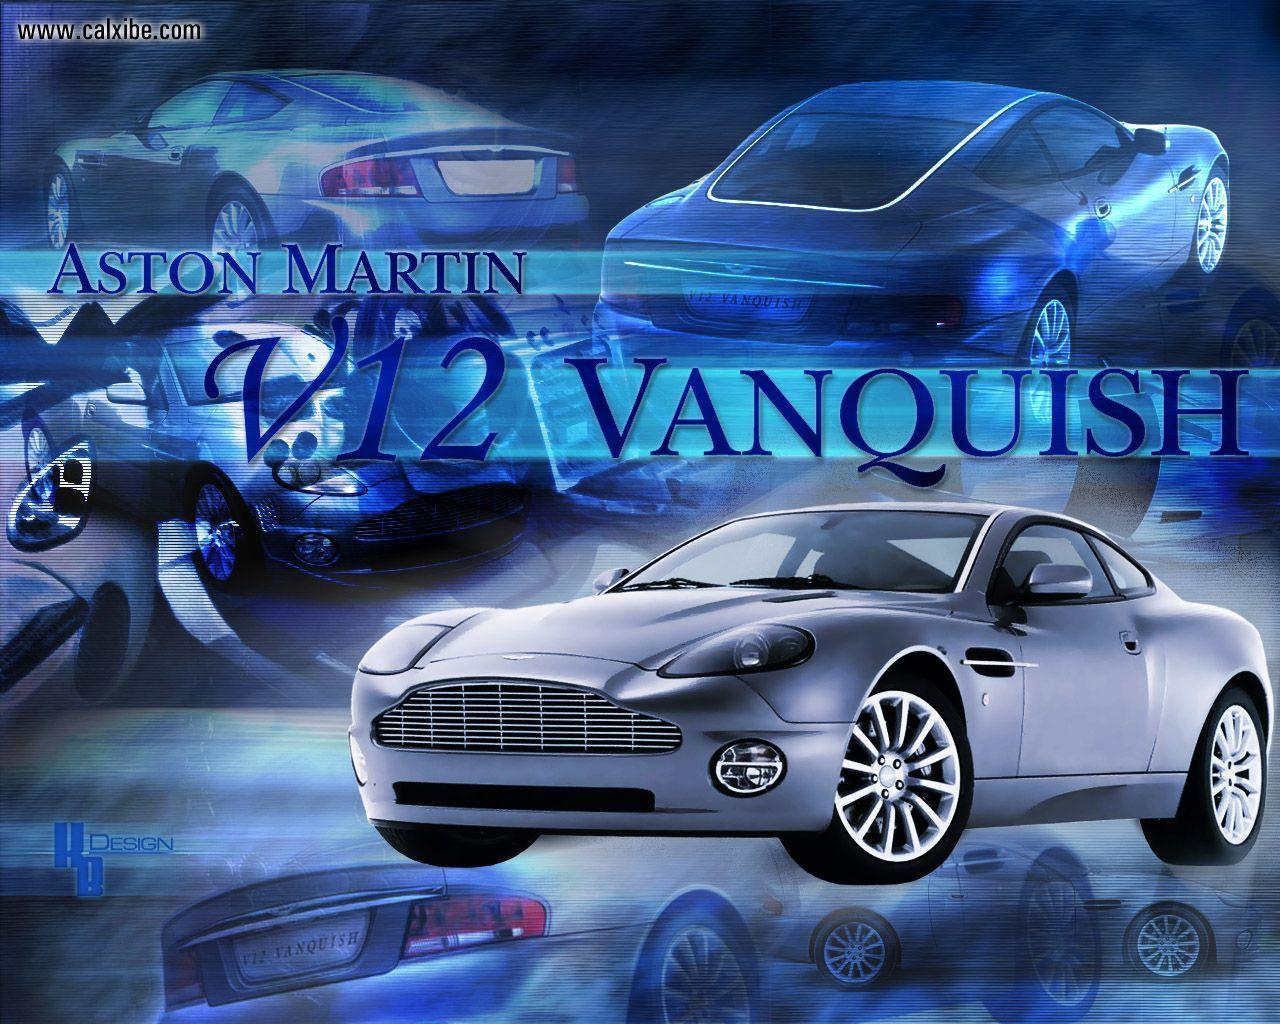 Cars: Aston Martin V12 Vanquish, picture nr. 10573